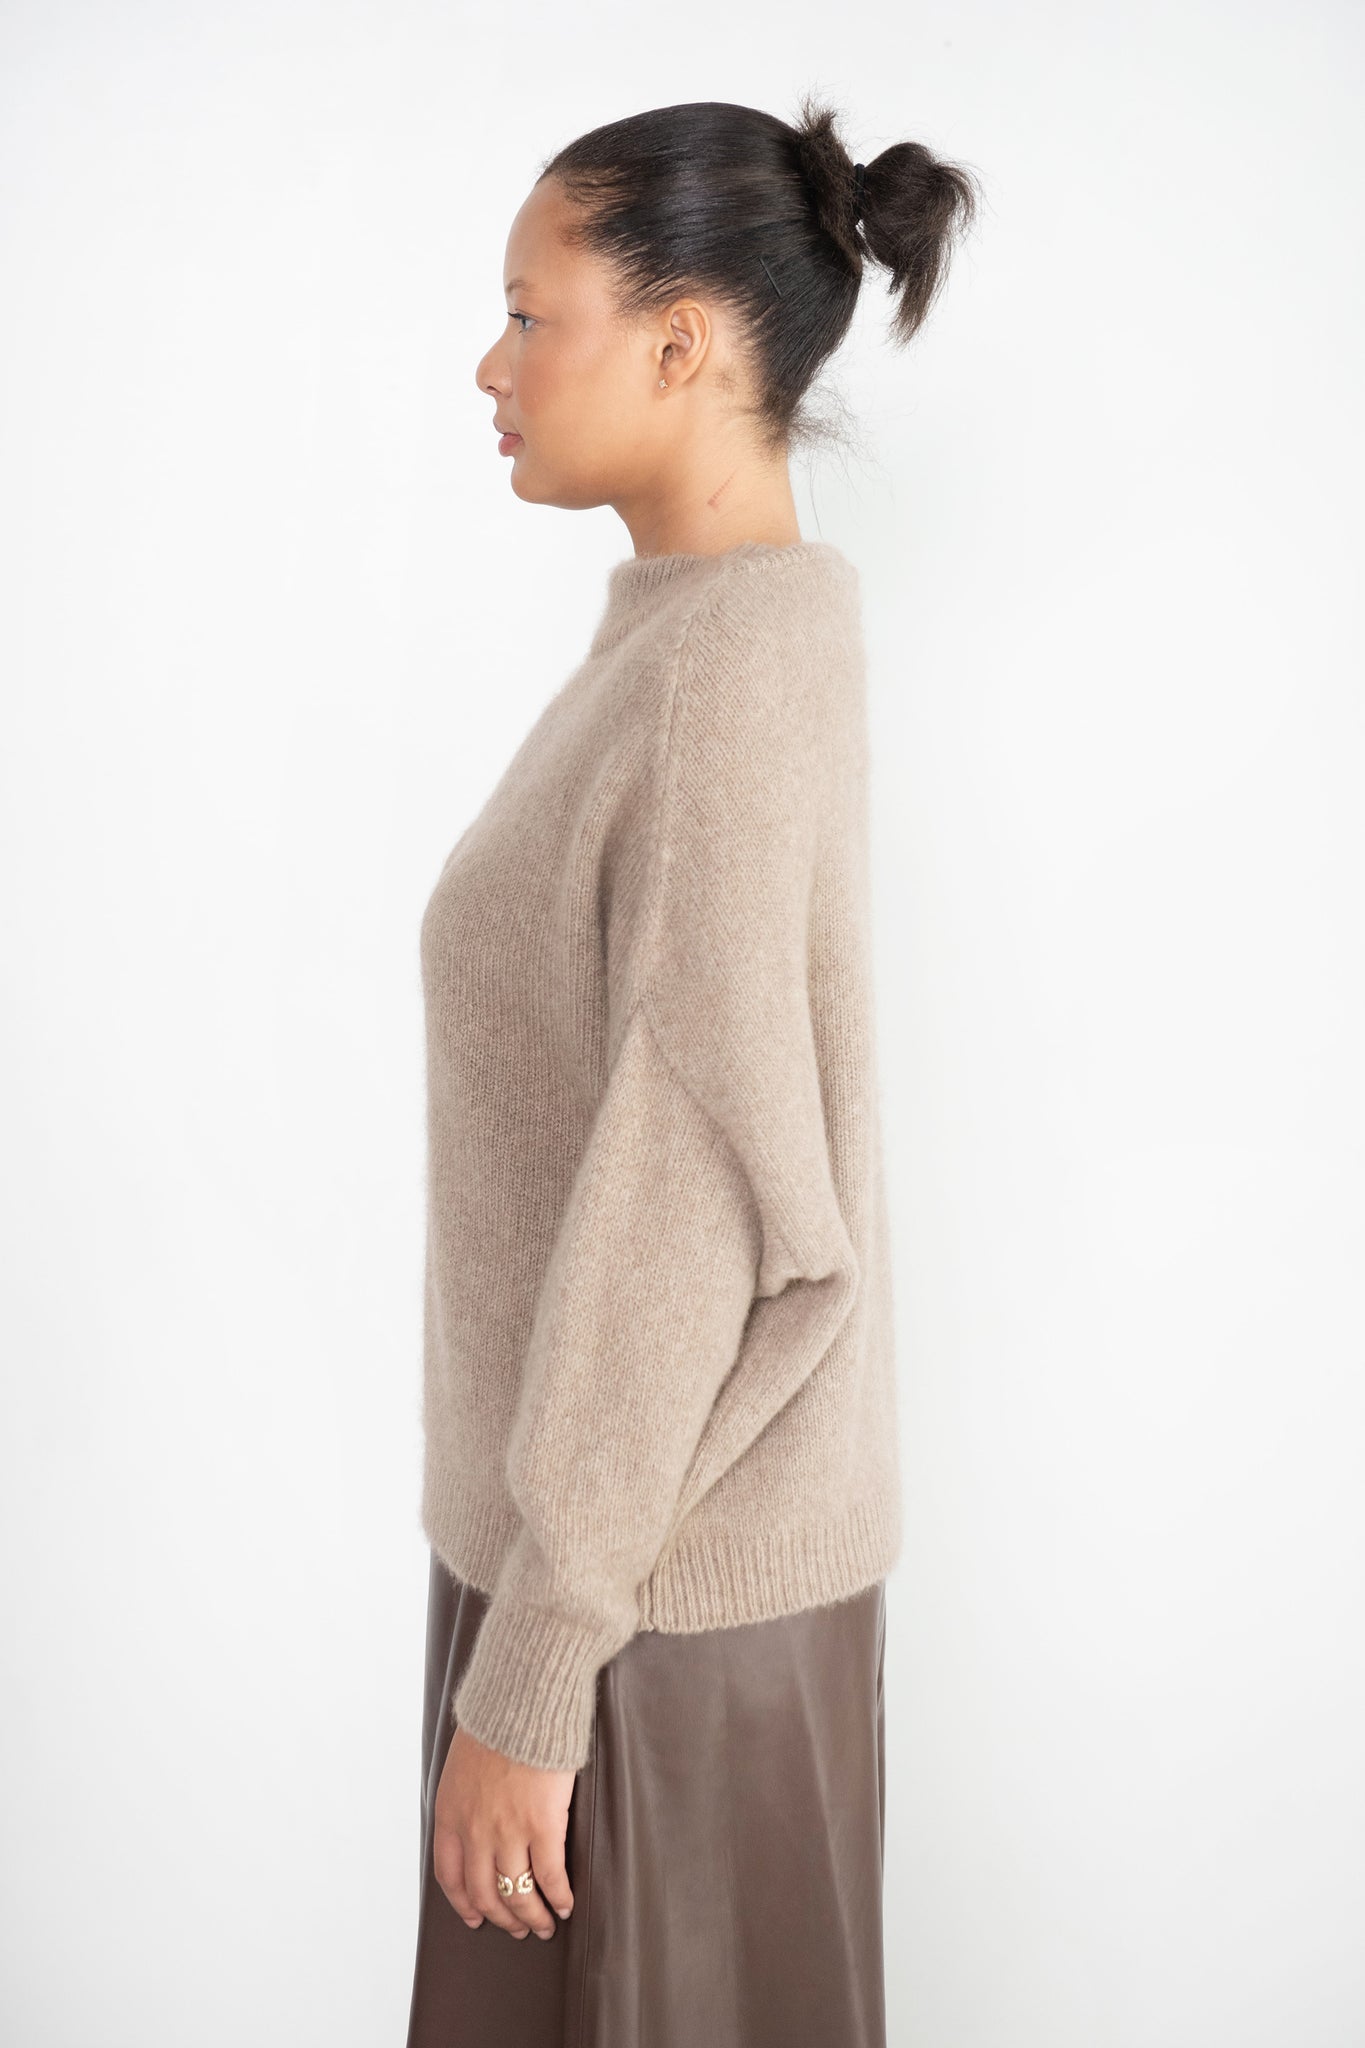 Dušan - Regular Round Neck Sweater, Tortora